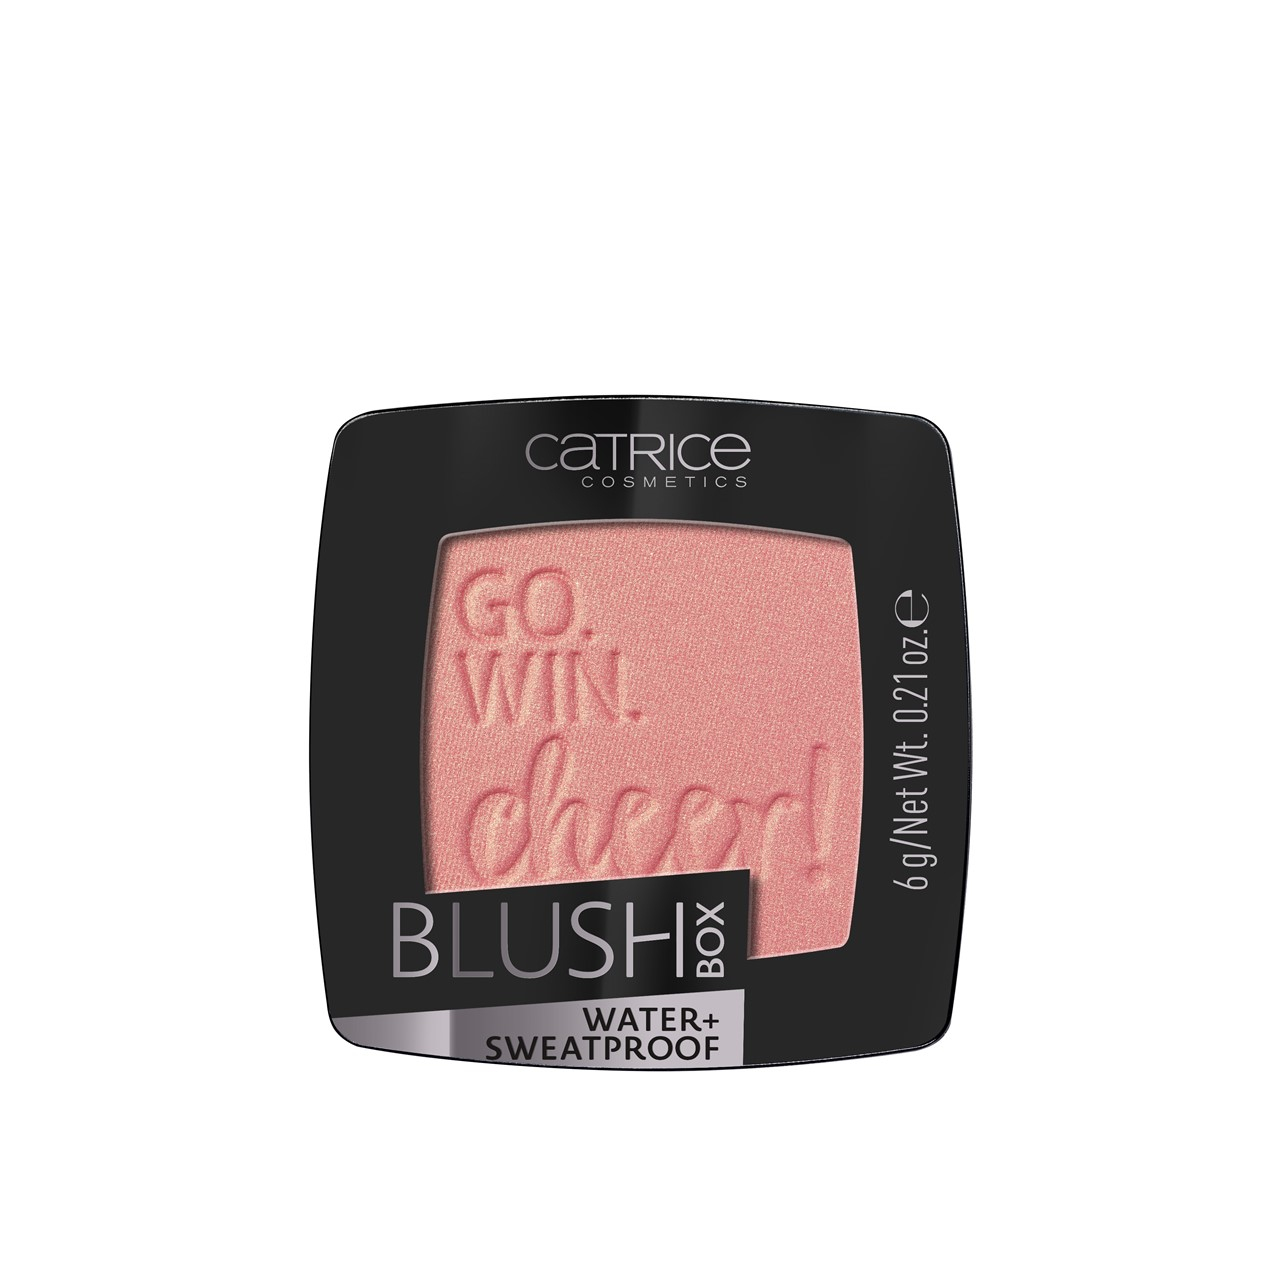 Catrice Blush Box 020 Glistening Pink 6g (0.21oz)